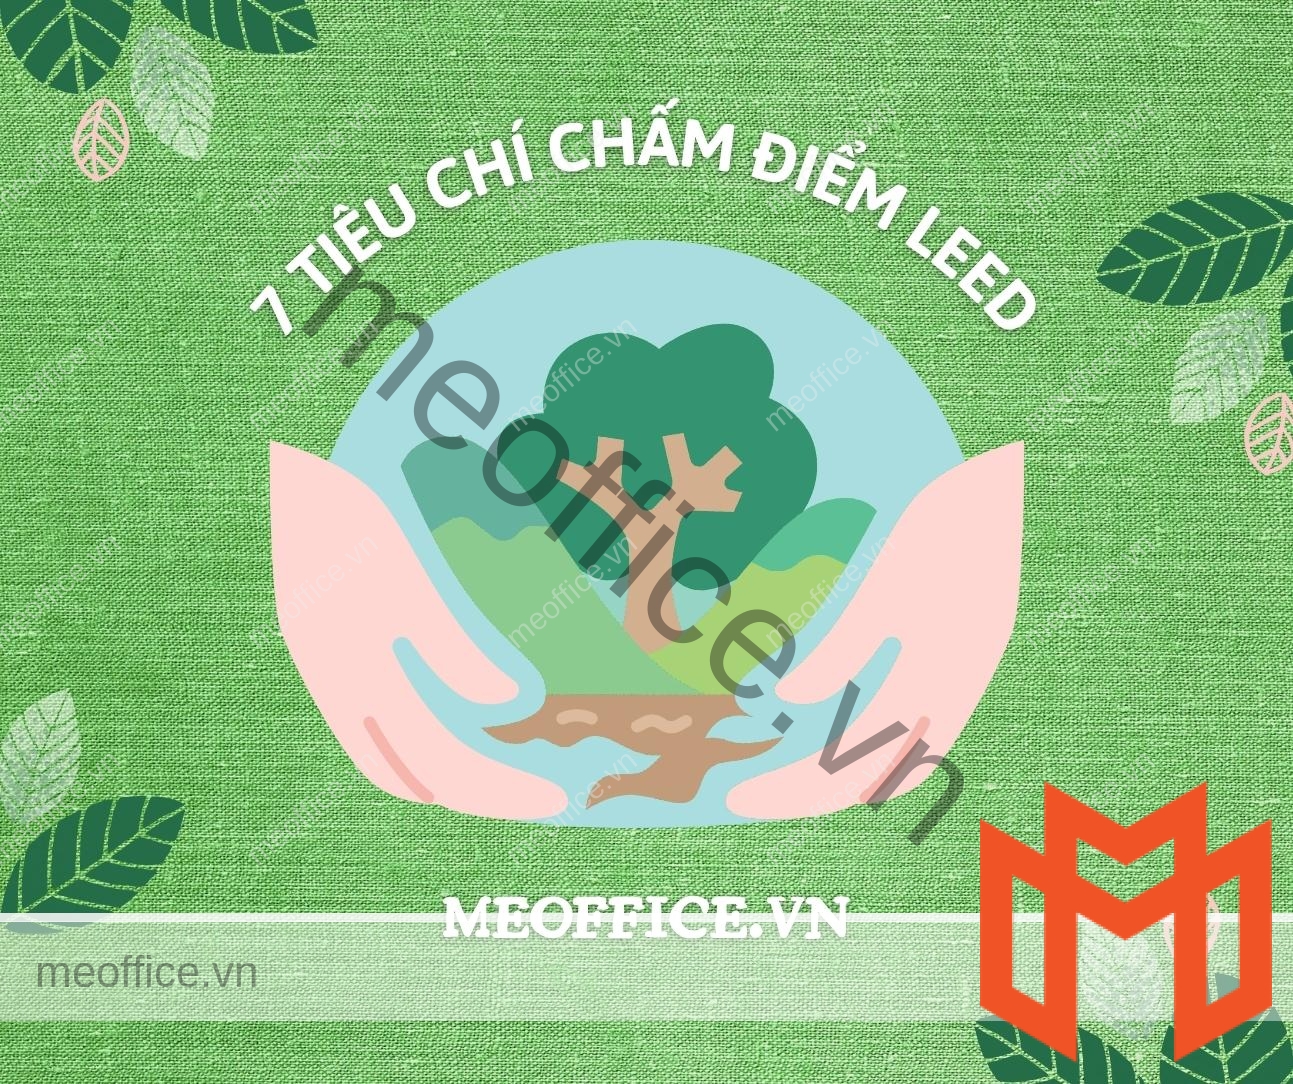 7-tieu-chi-cham-diem-leed-meoffice.vn